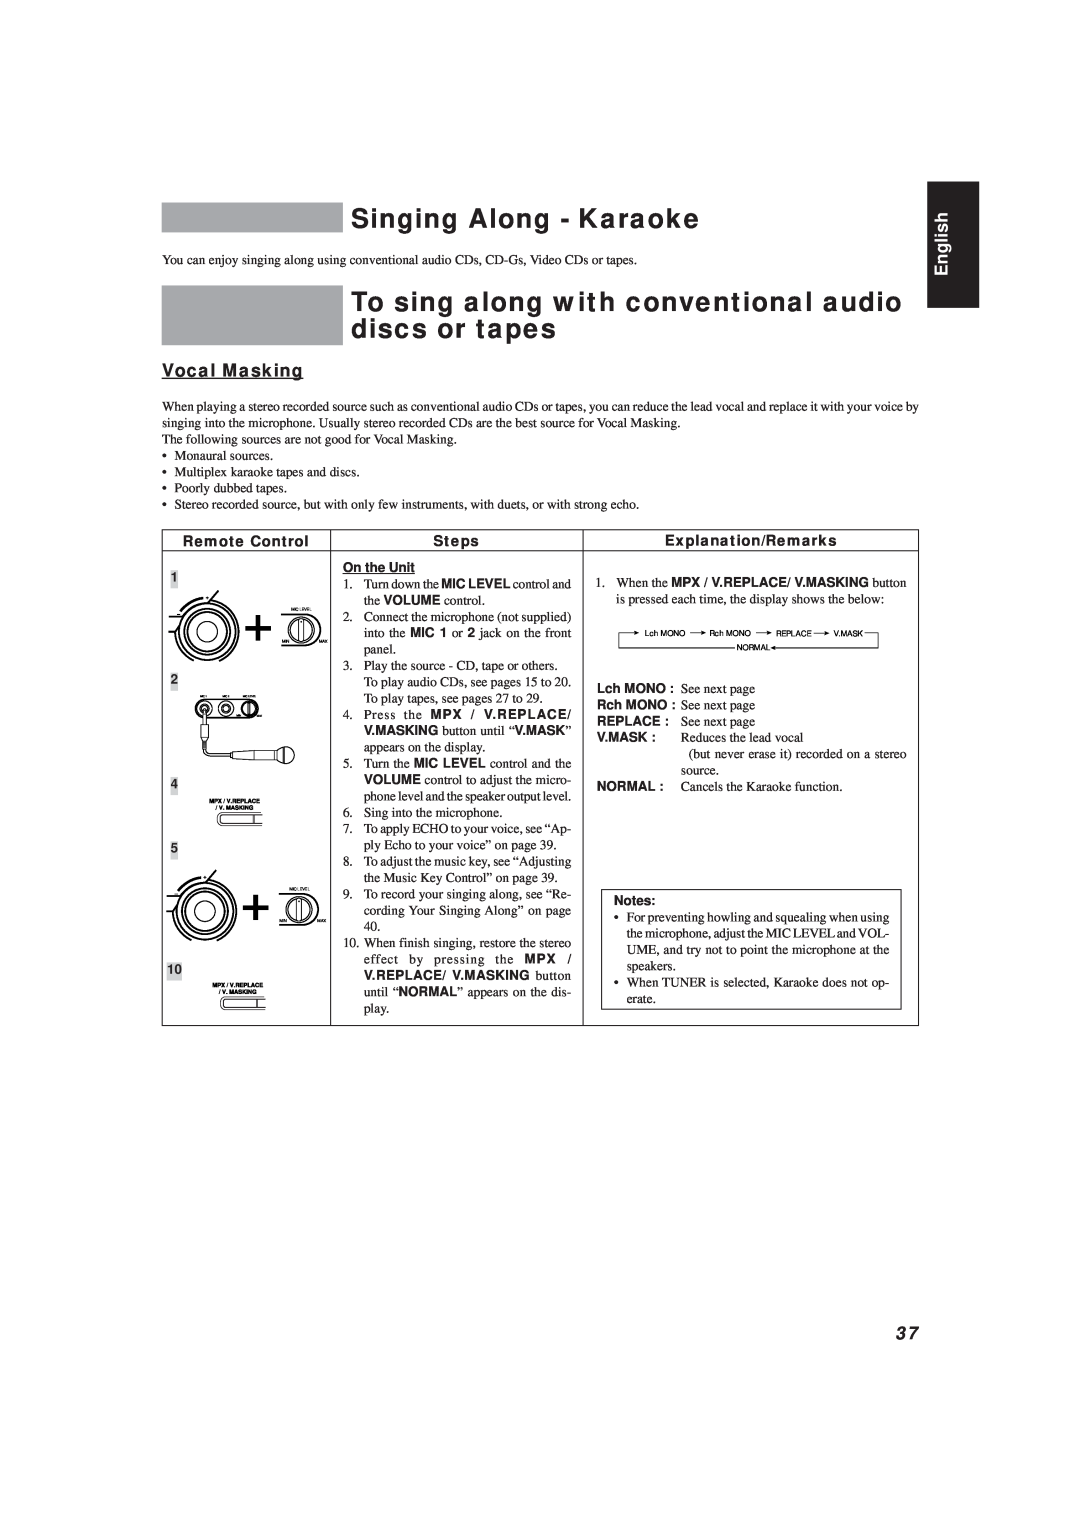 JVC MX-V588T, MX-V508T manual Singing Along - Karaoke, English, Remote Control, Steps, Explanation/Remarks 